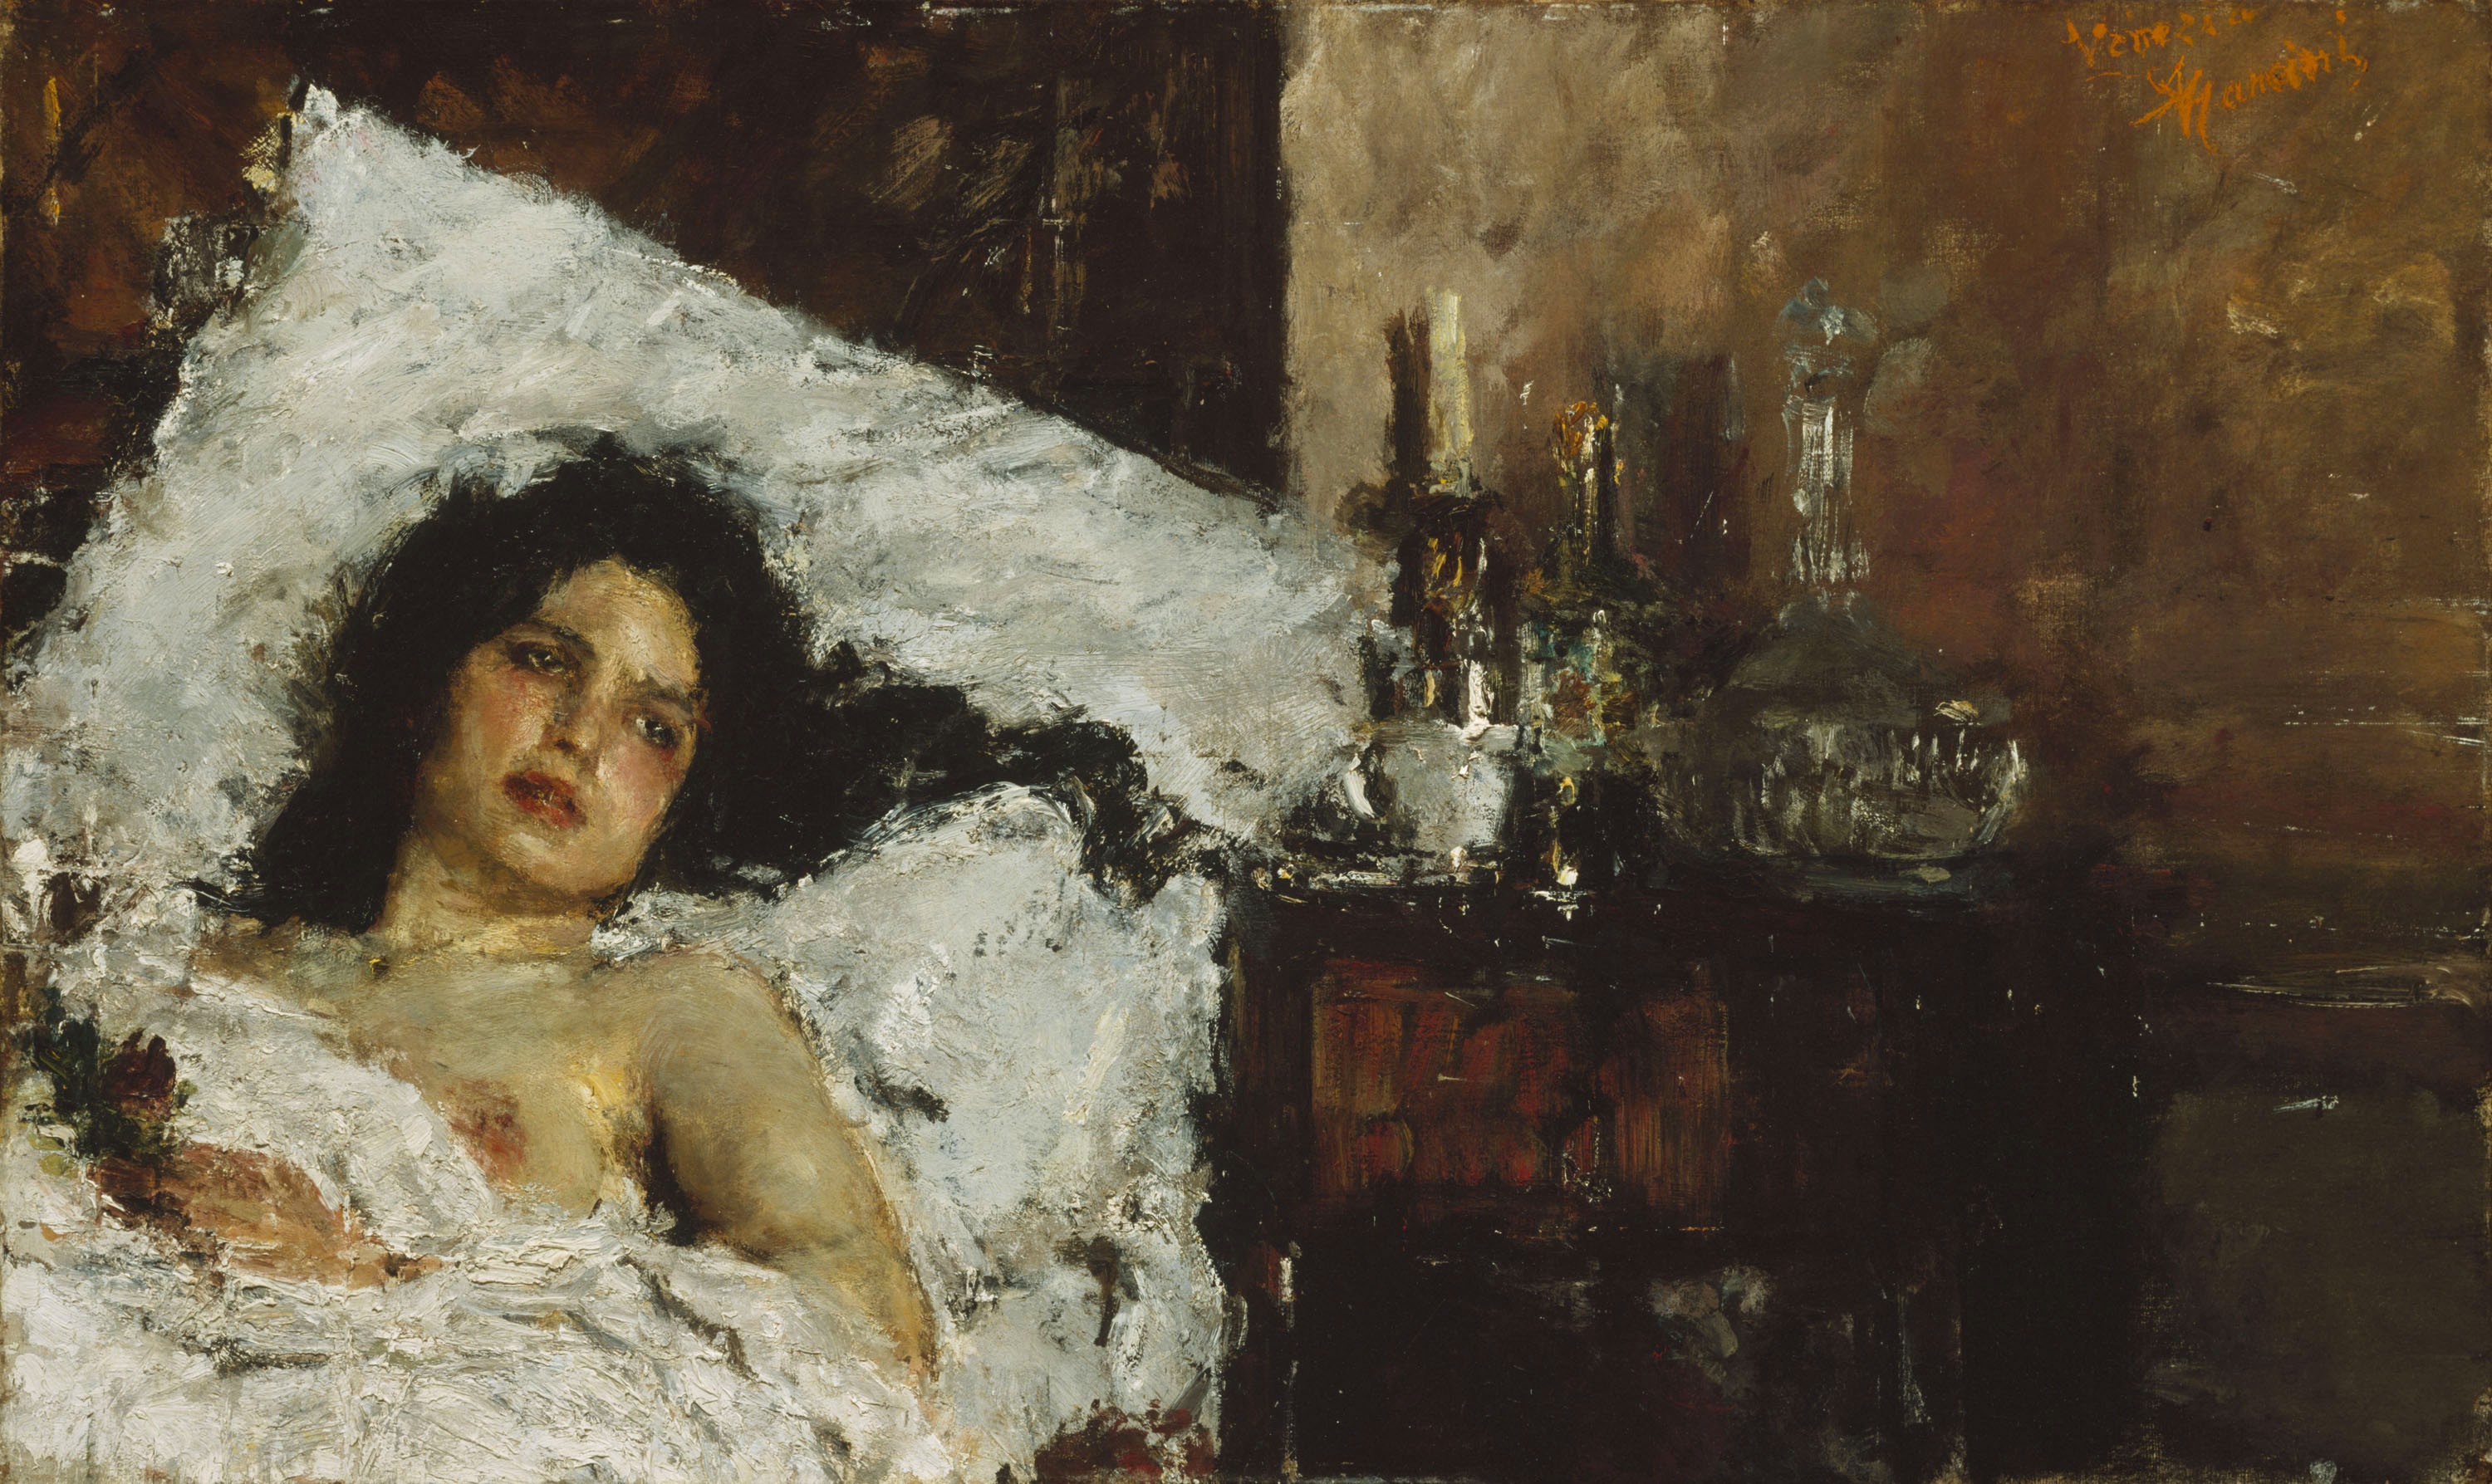 Odihnind by Antonio Mancini - cca. 1887 - 60.9 x 100 cm 